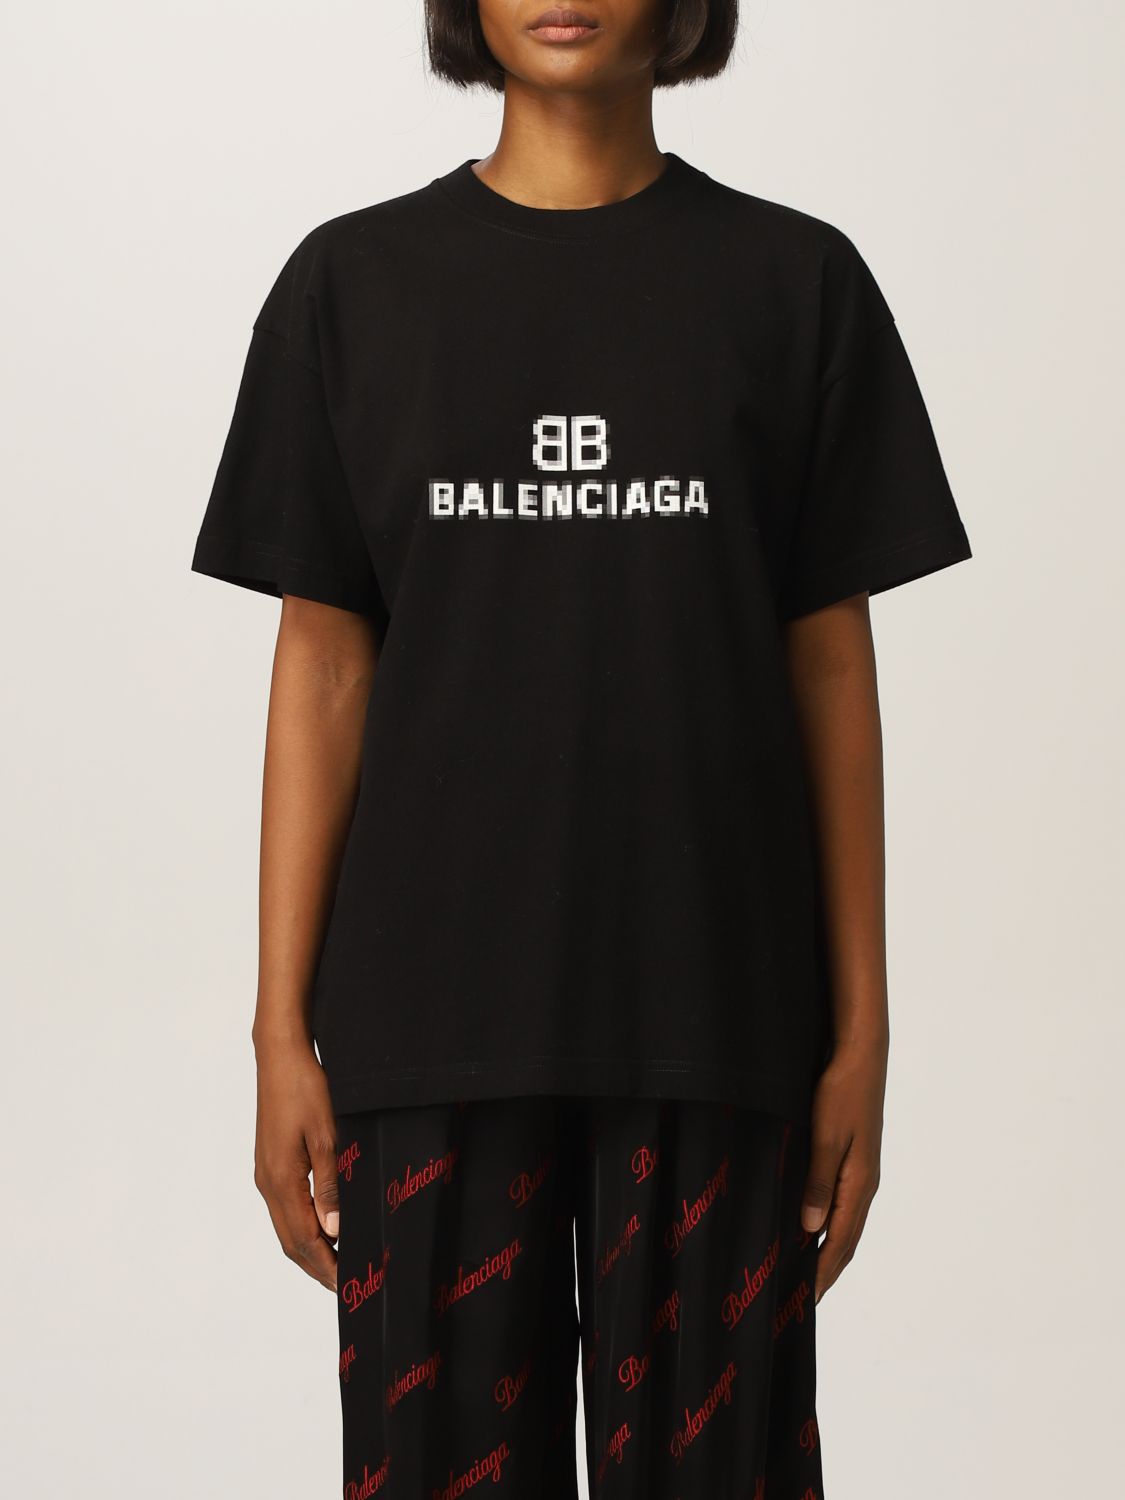 Balenciaga t Shirt. Футболка Balenciaga BB. Fake Balenciaga футболка. Майка Баленсиага.